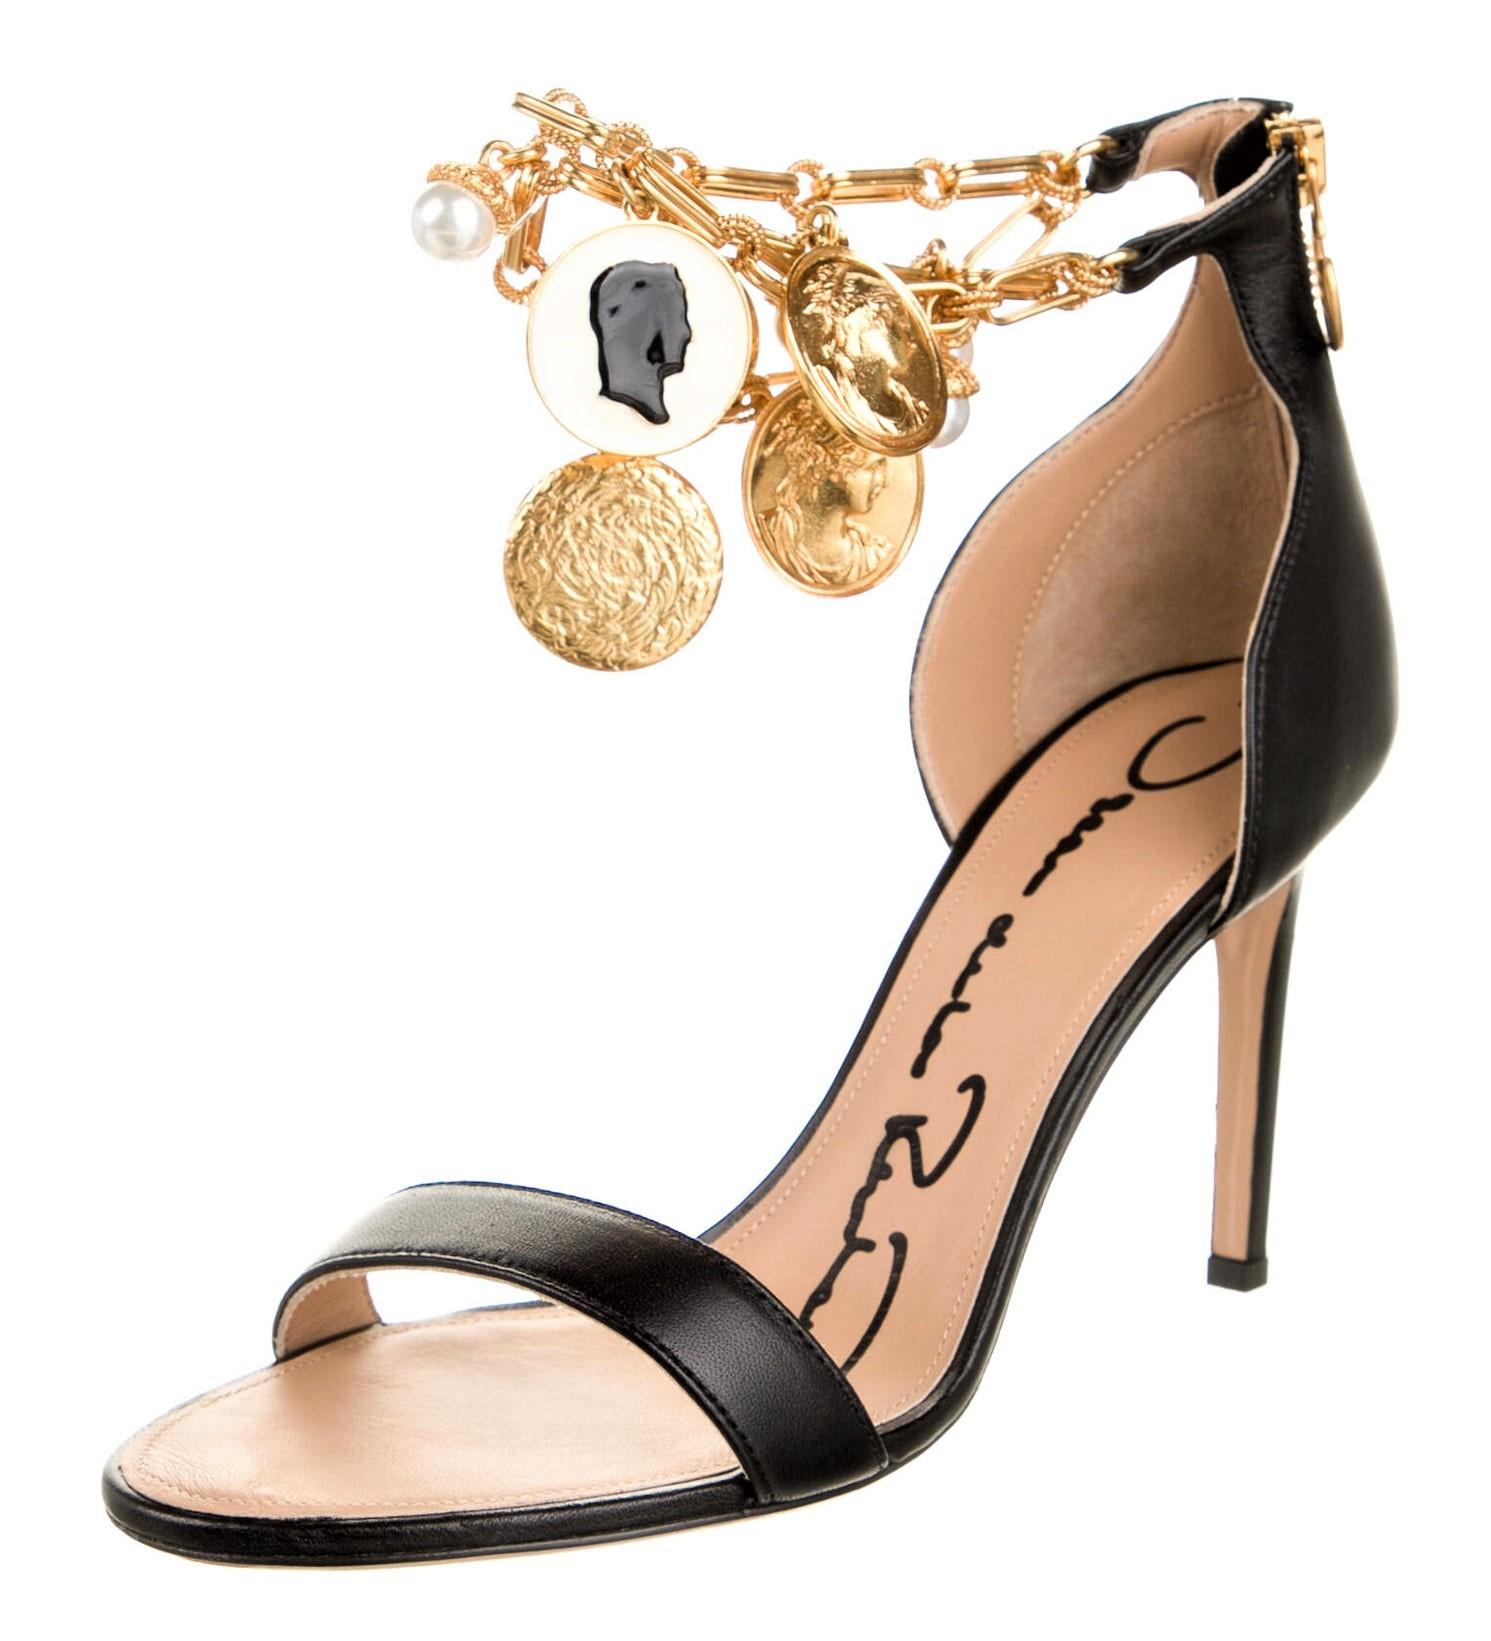 oscar de la renta gold heels